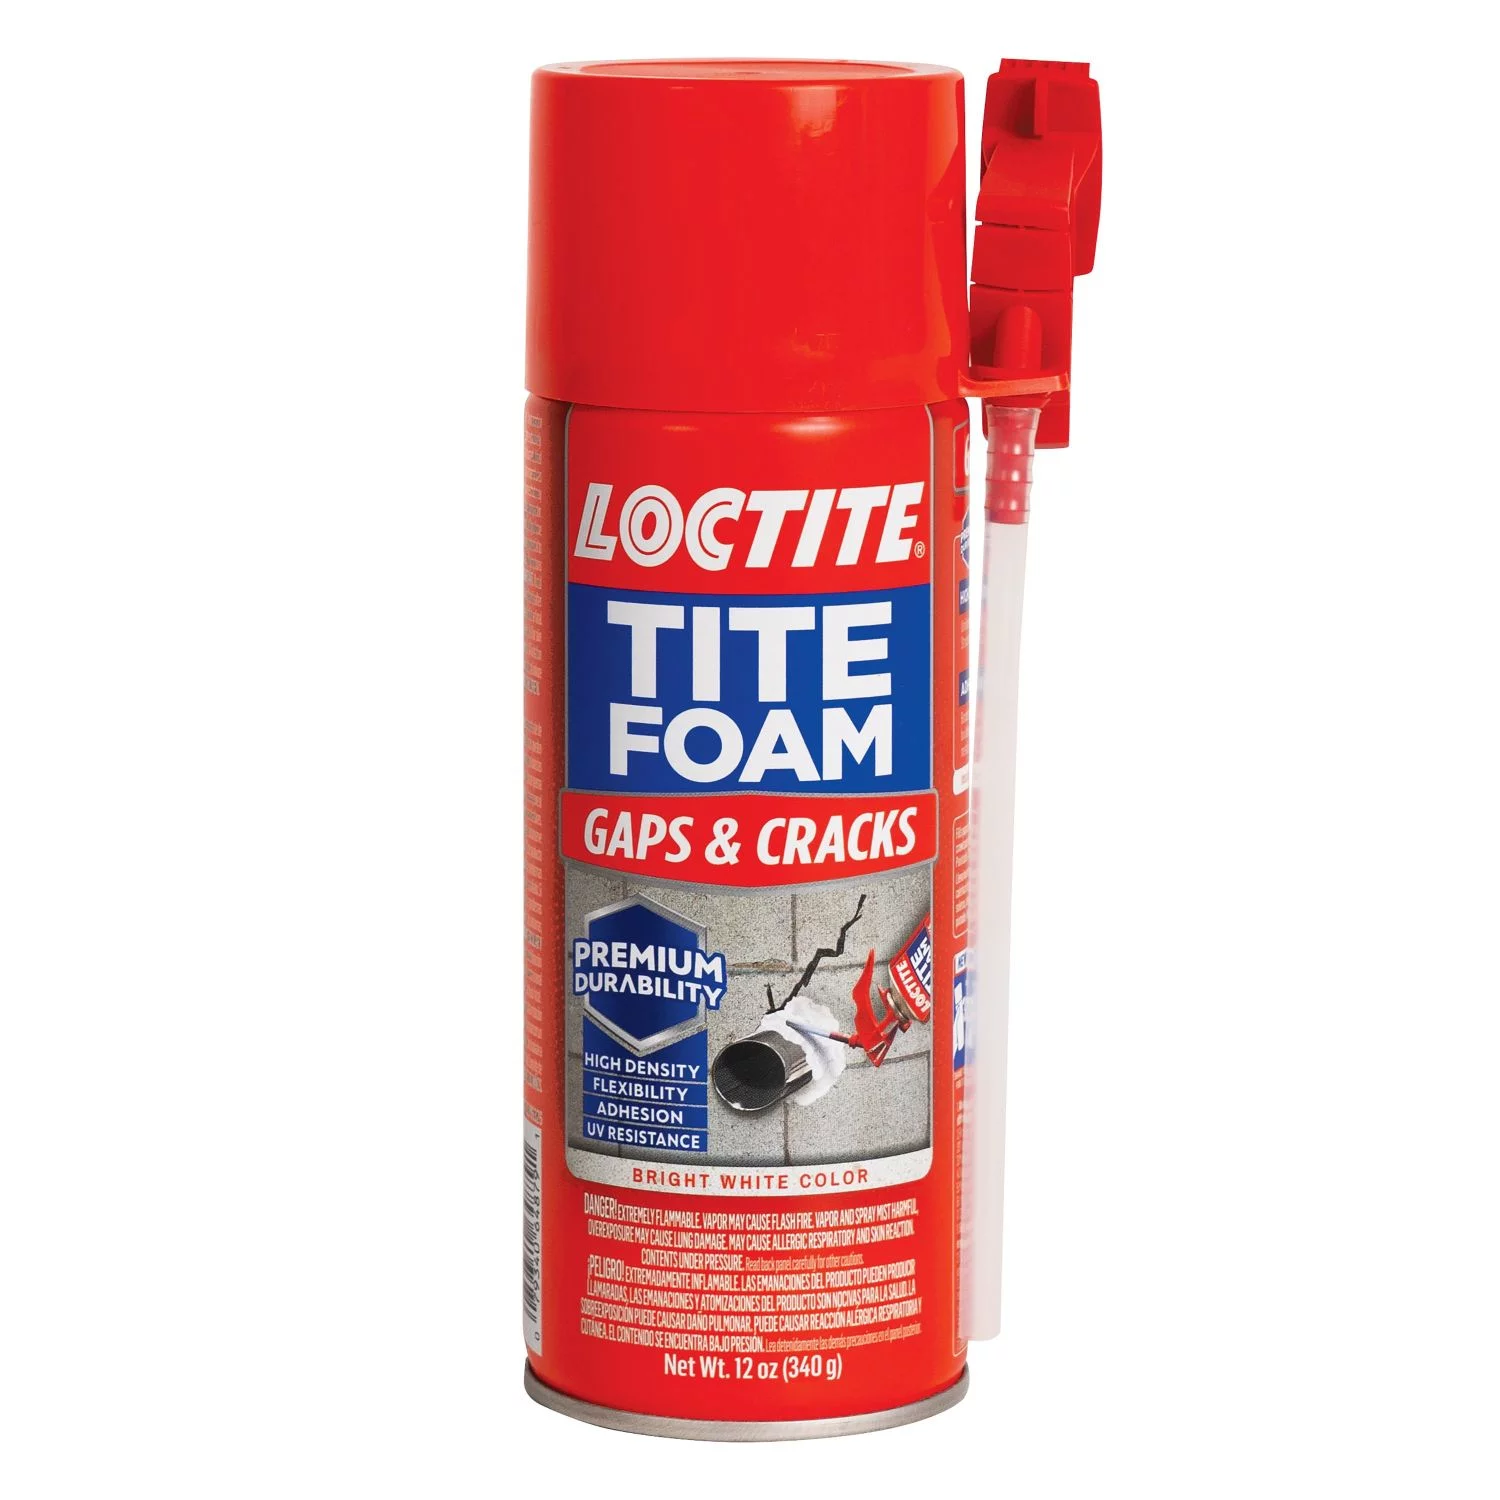 Loctite Tite Foam Insulating Foam Sealant Gaps & Cracks, Pack of 1, White 12 oz Can